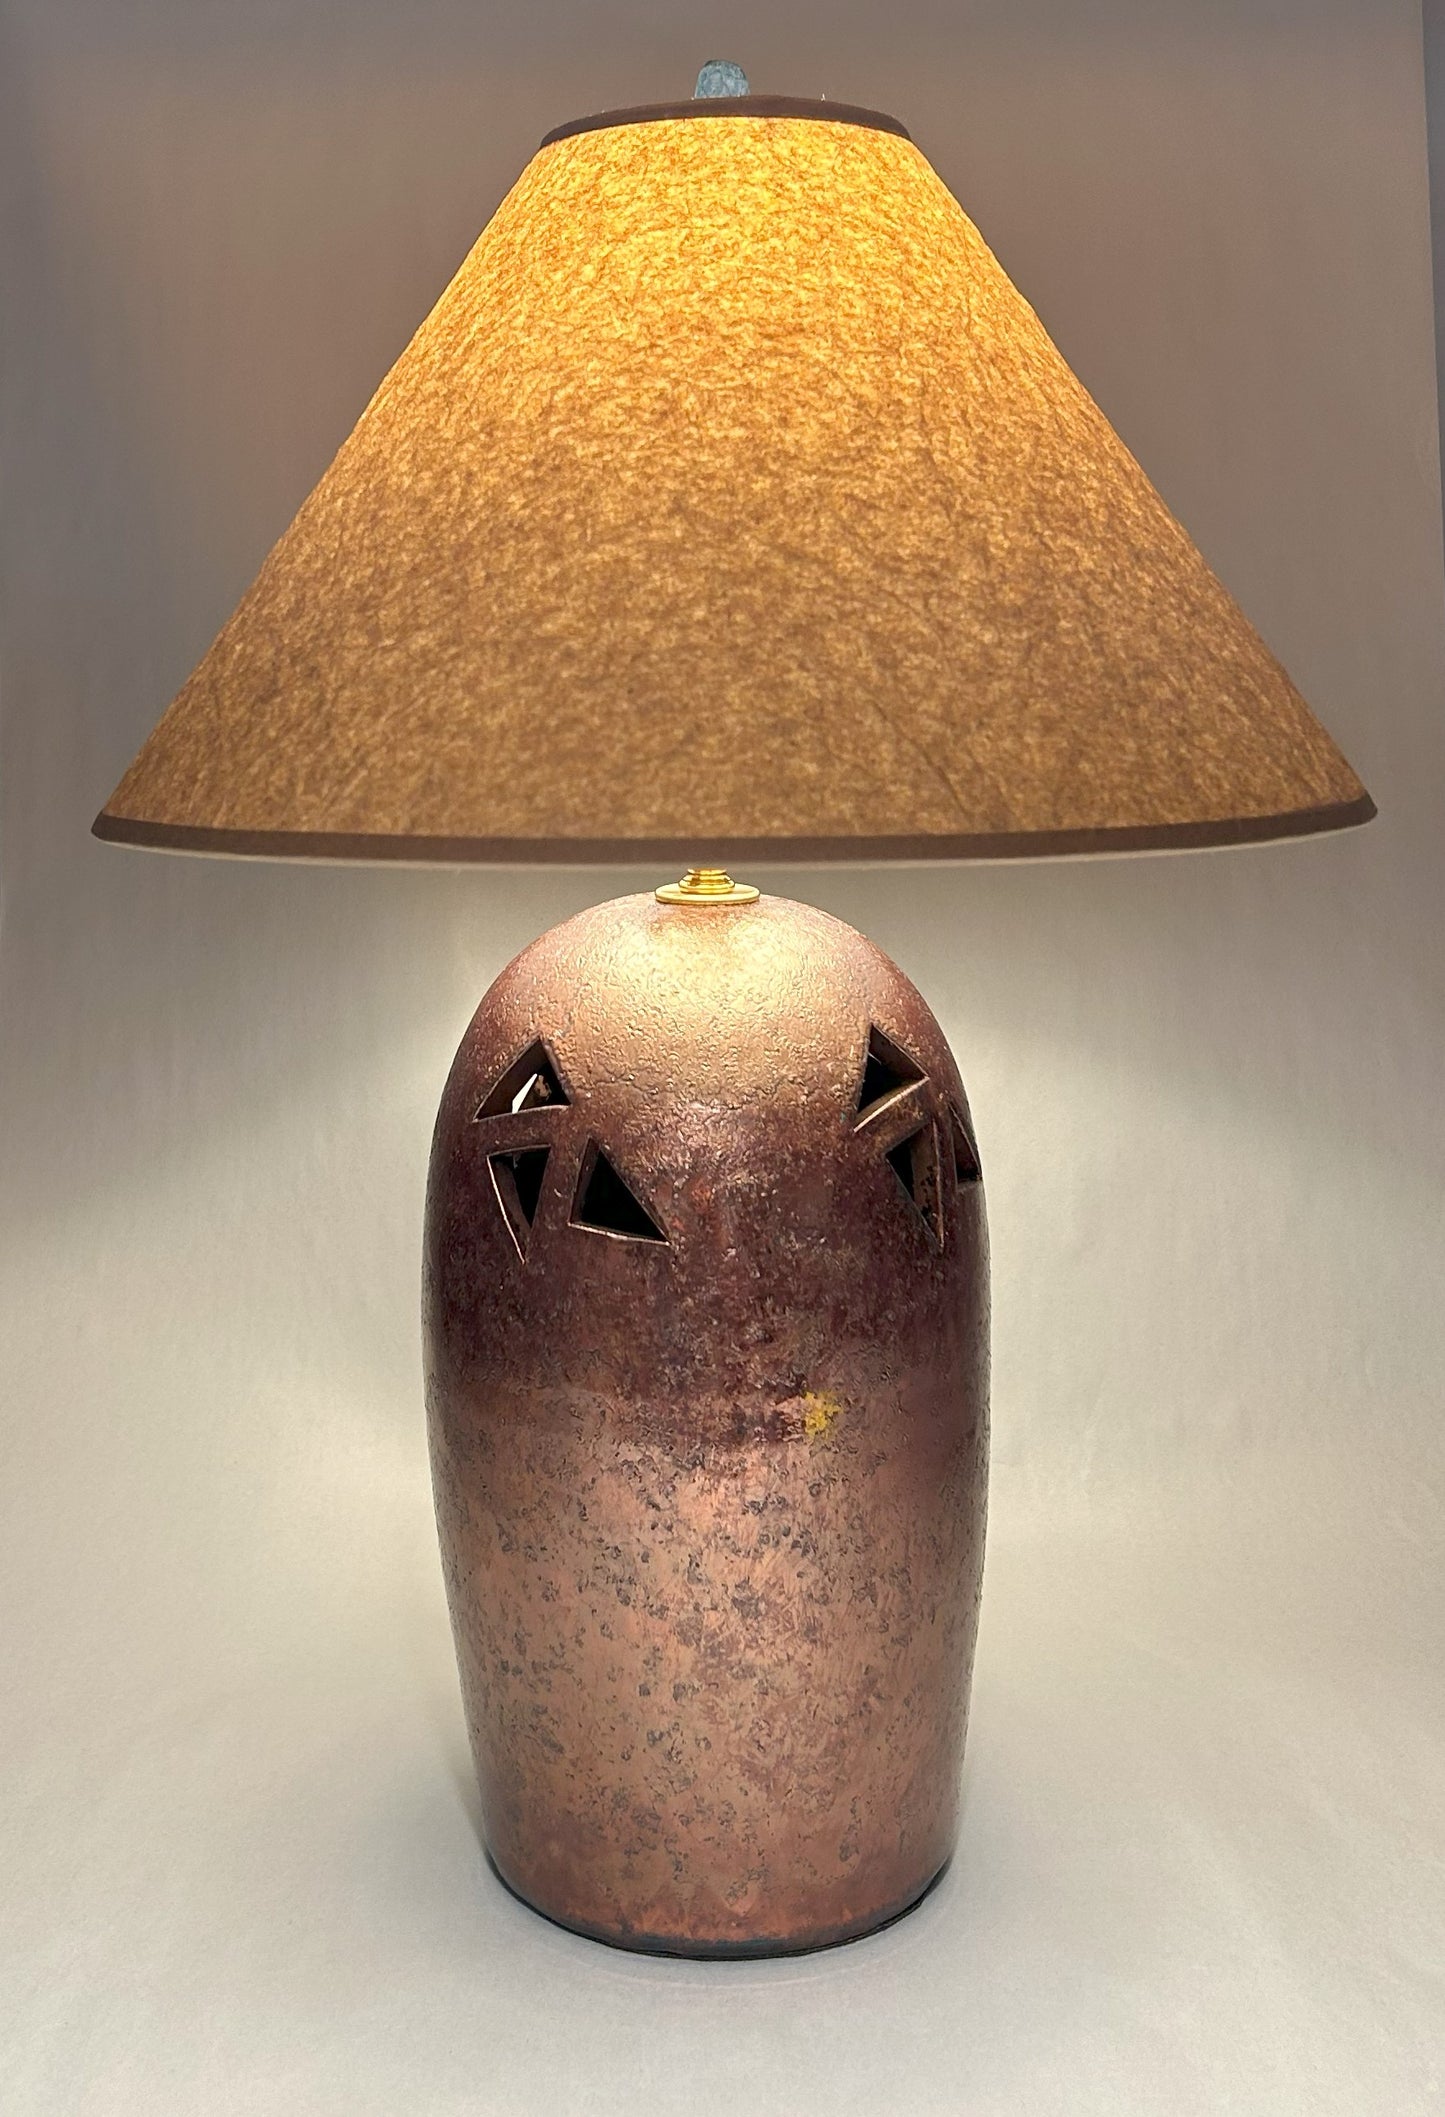 Handmade Raku Lamp with Copper Green Glaze - Wrinkled Paper Shade - Handmade Finial